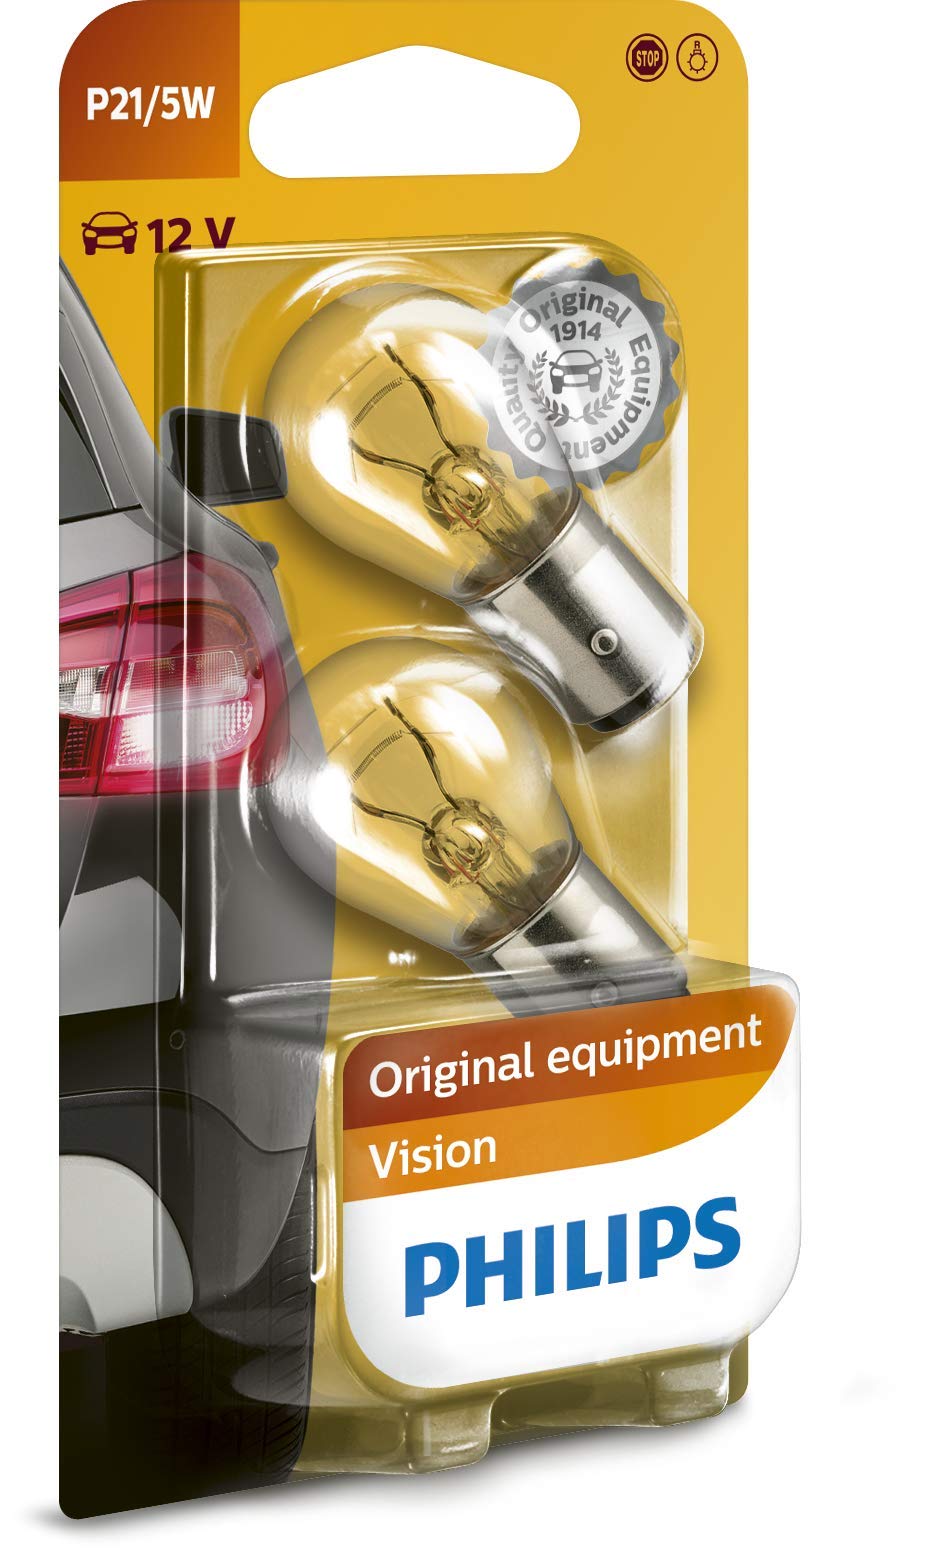 Philips 12499B2 Kugellampe Vision P21/5W Signallampe, 2er Blister, 13.50x9.50x13.50, White von Philips automotive lighting